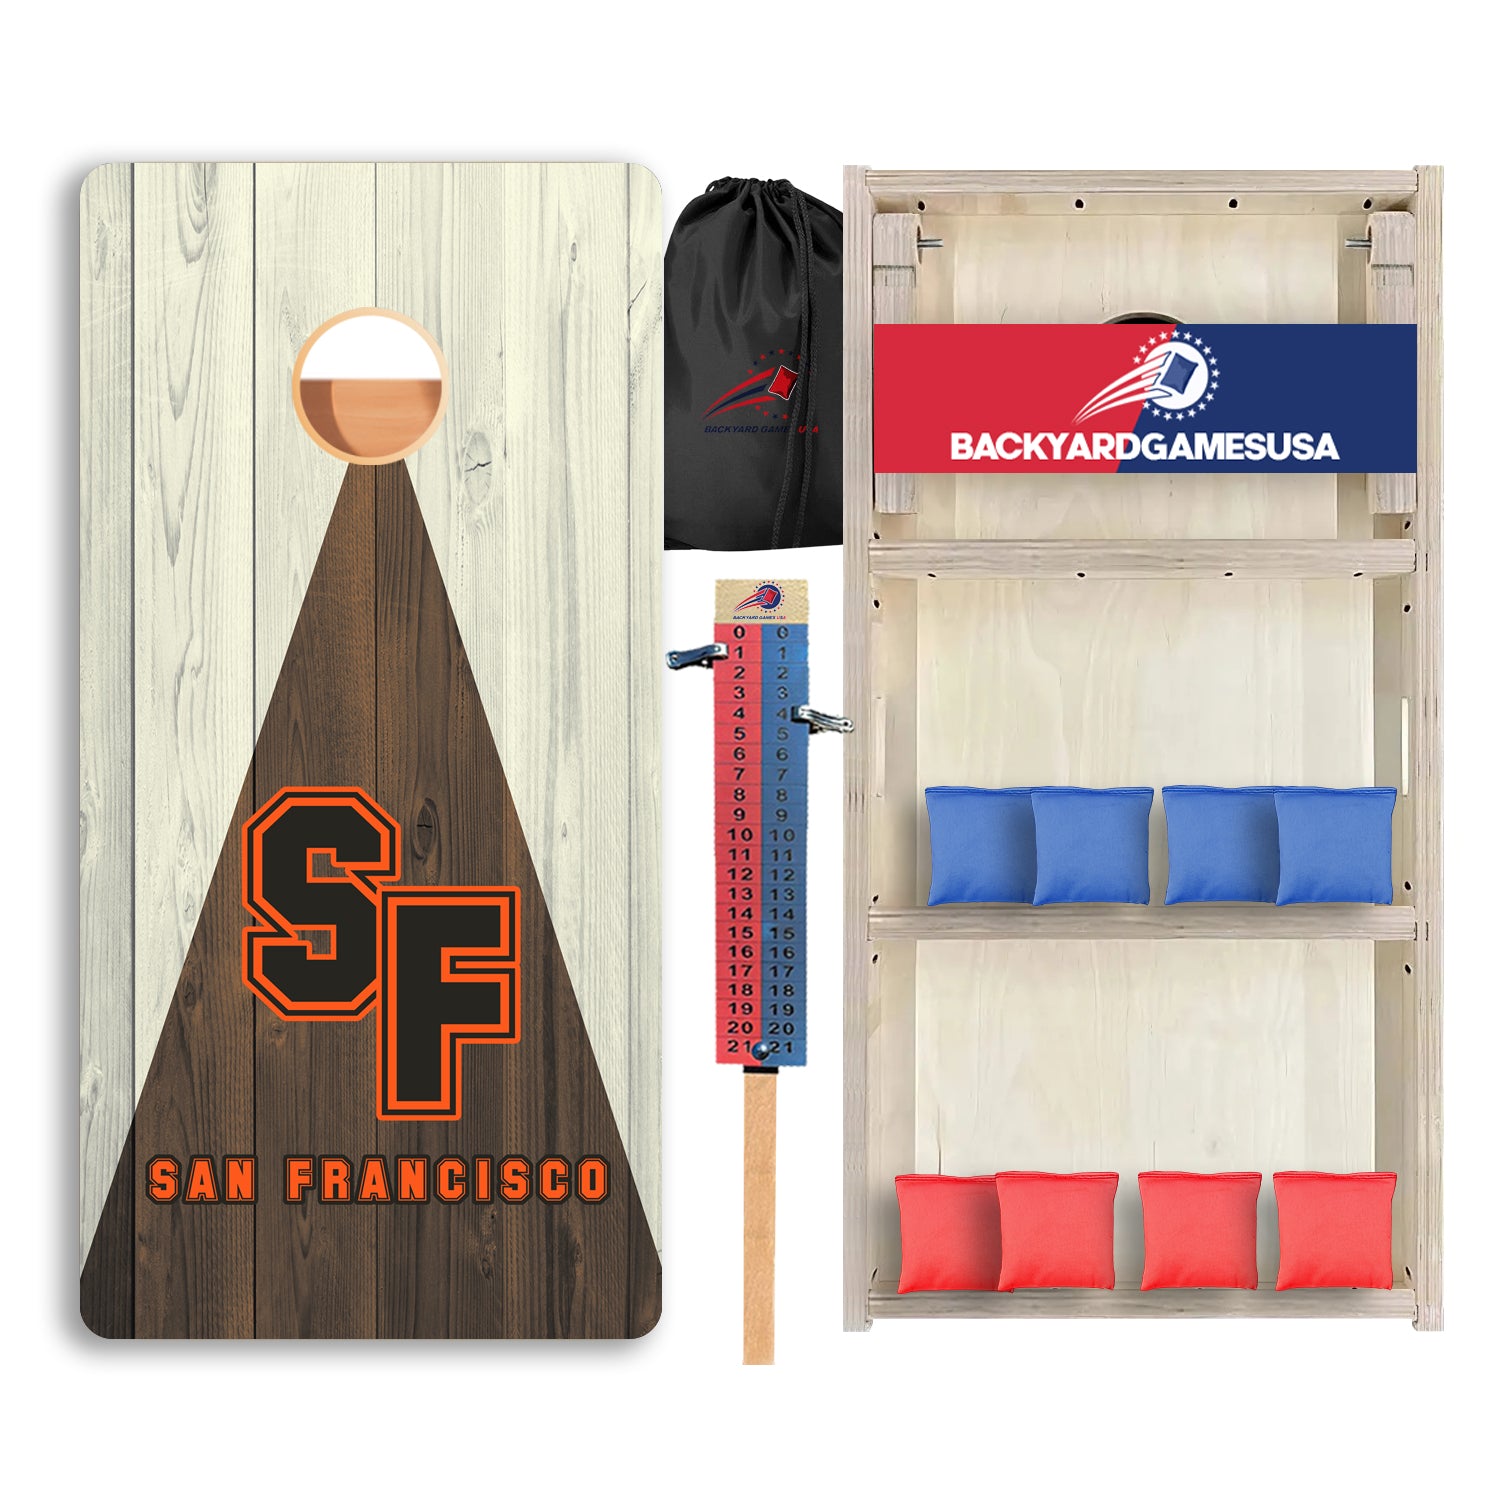 San Francisco Baseball Professional Cornhole Boards